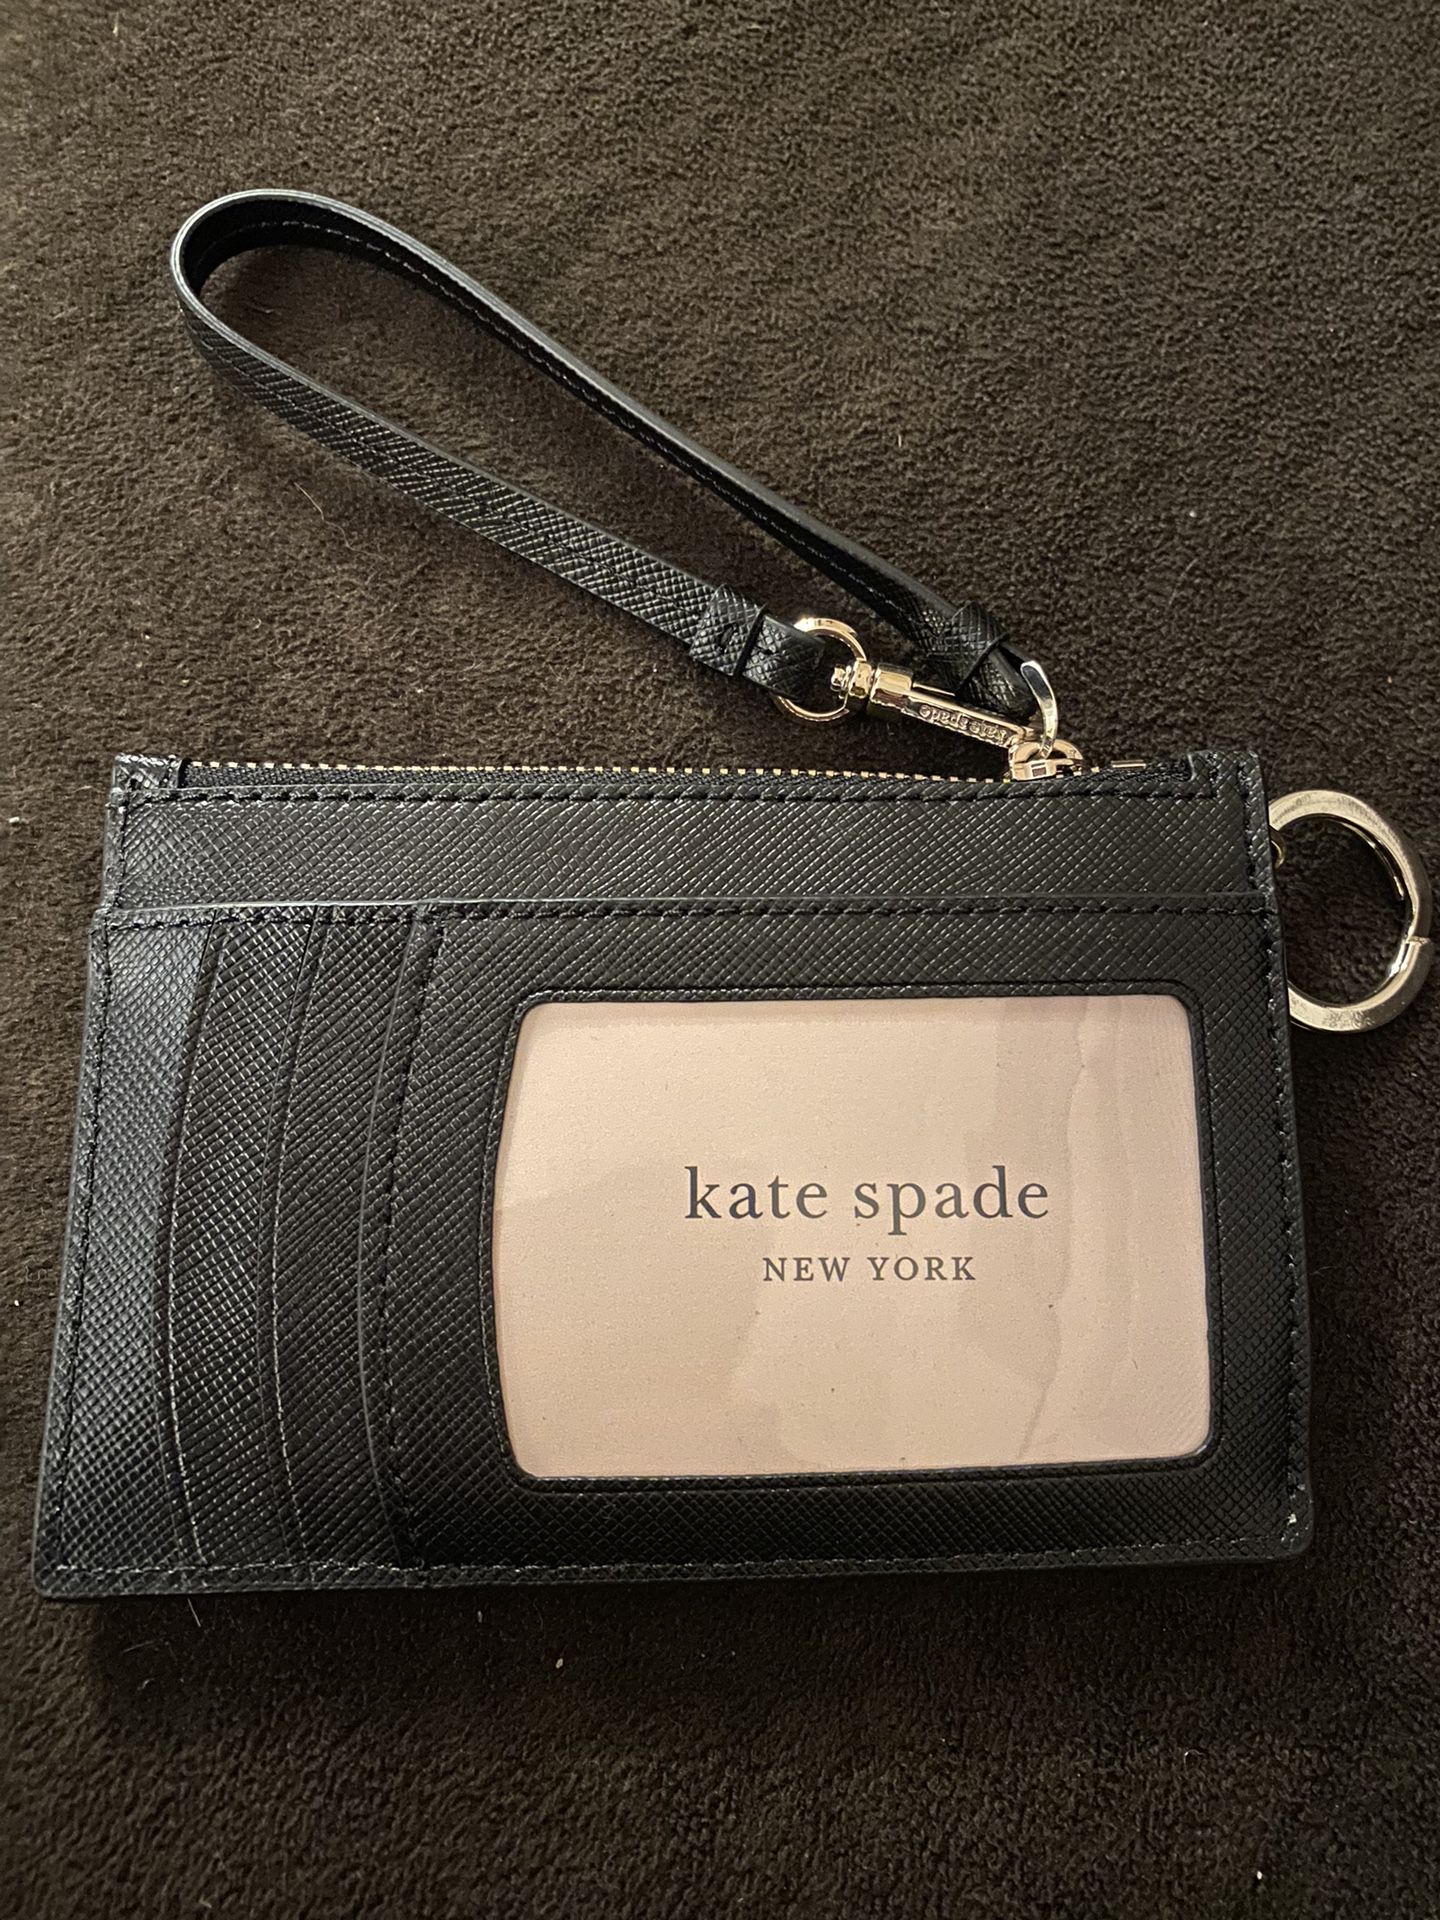 Kate Spade Wallet for Sale in Las Vegas, NV - OfferUp